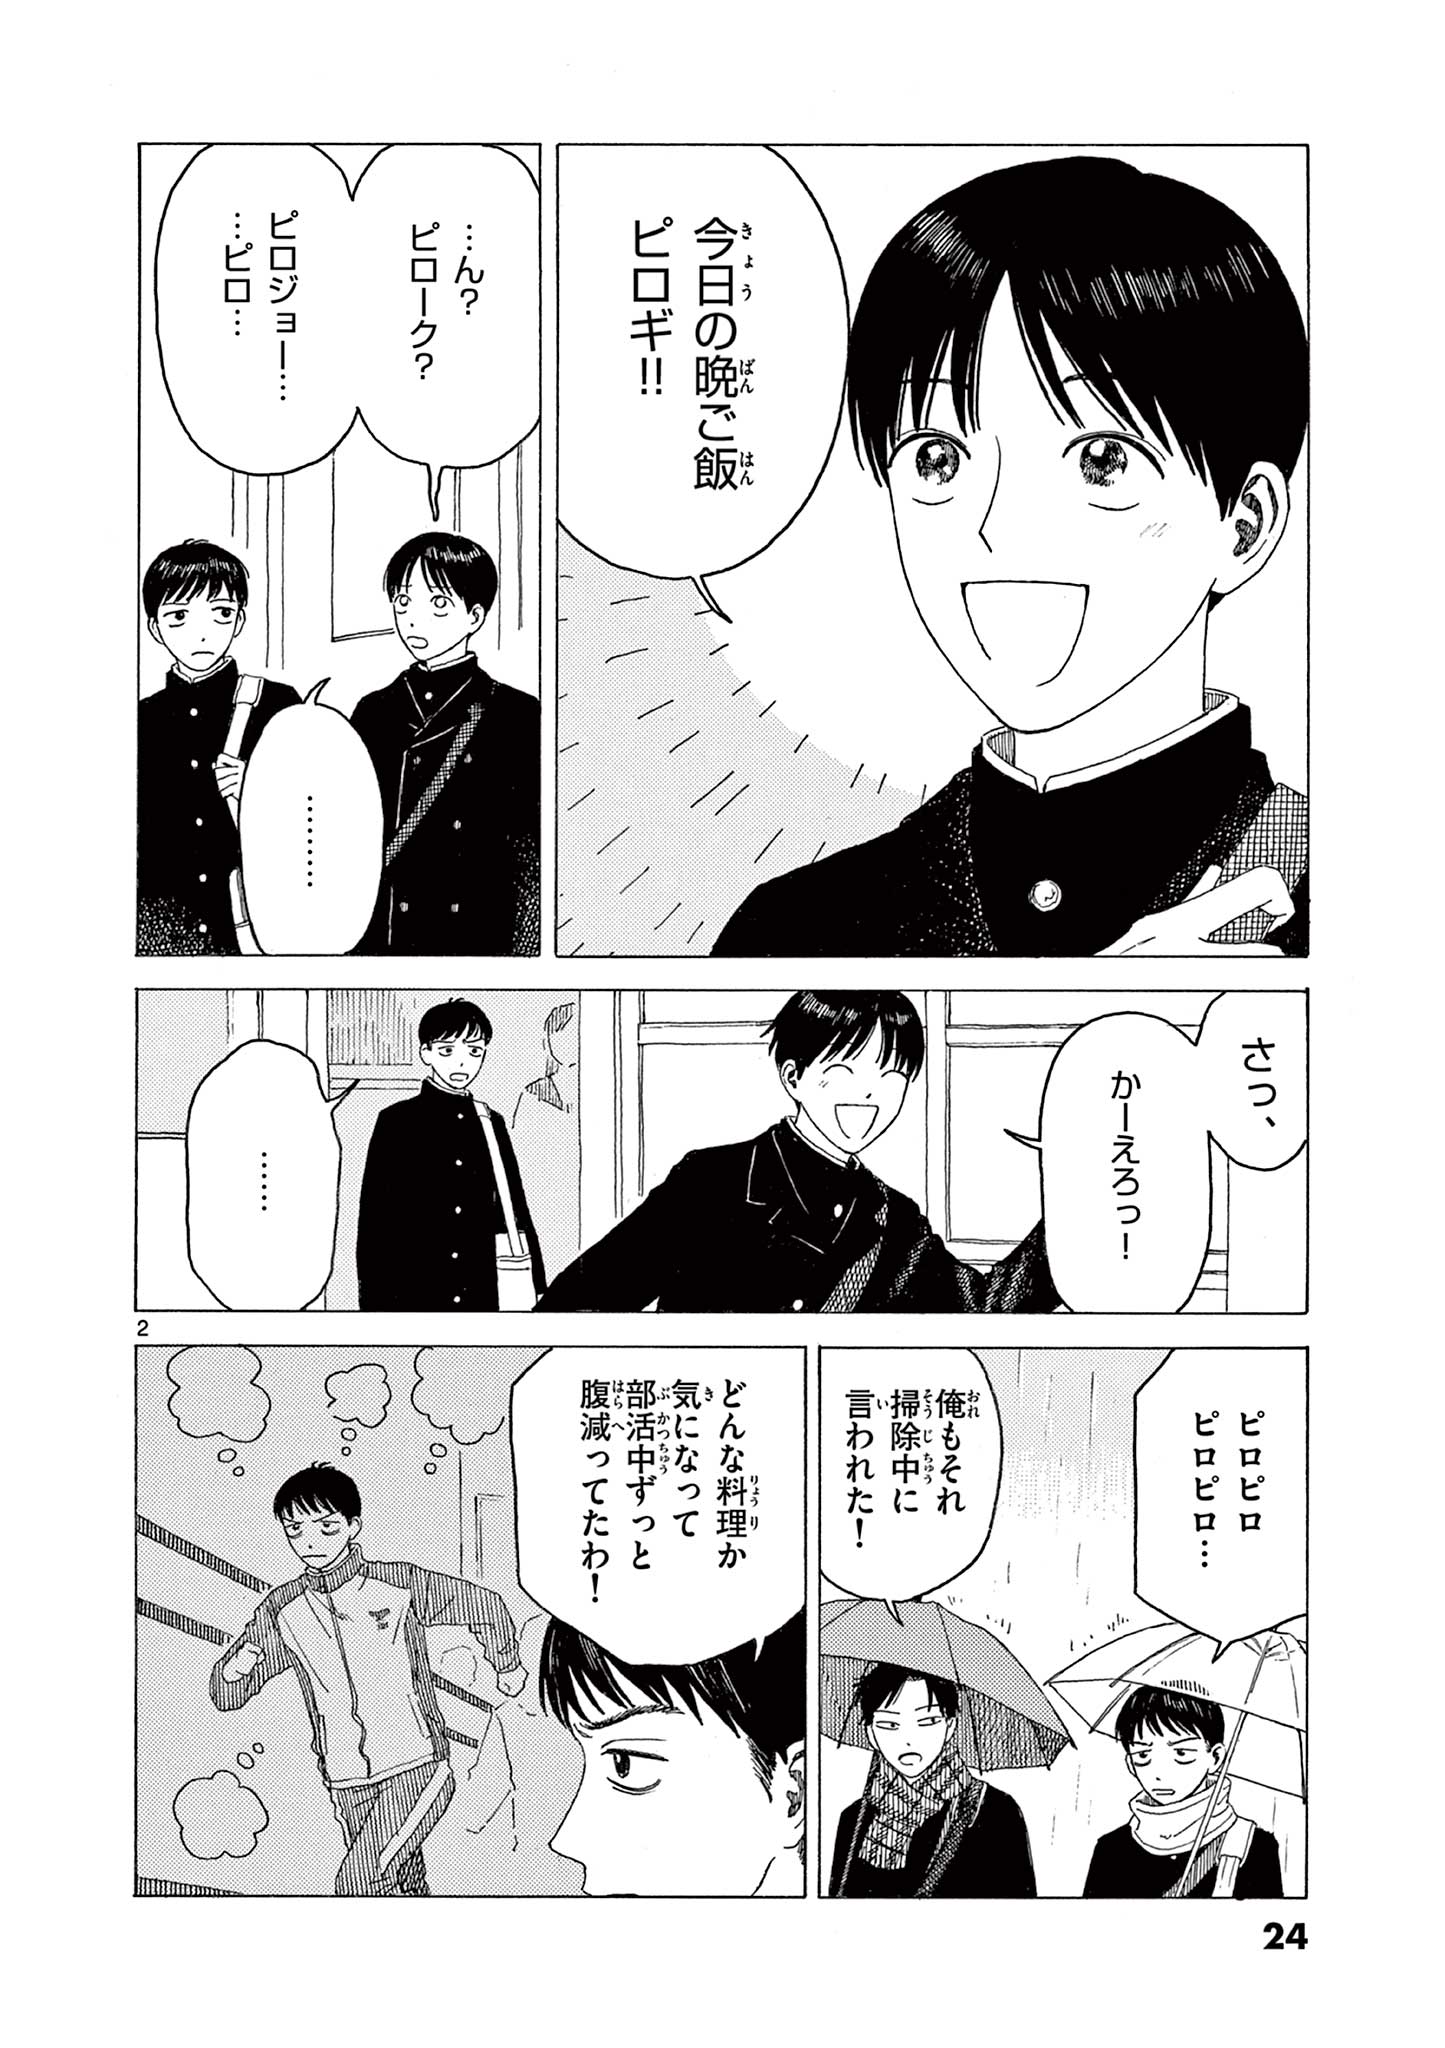 Kujima Utaeba Ie Hororo - Chapter 21 - Page 2